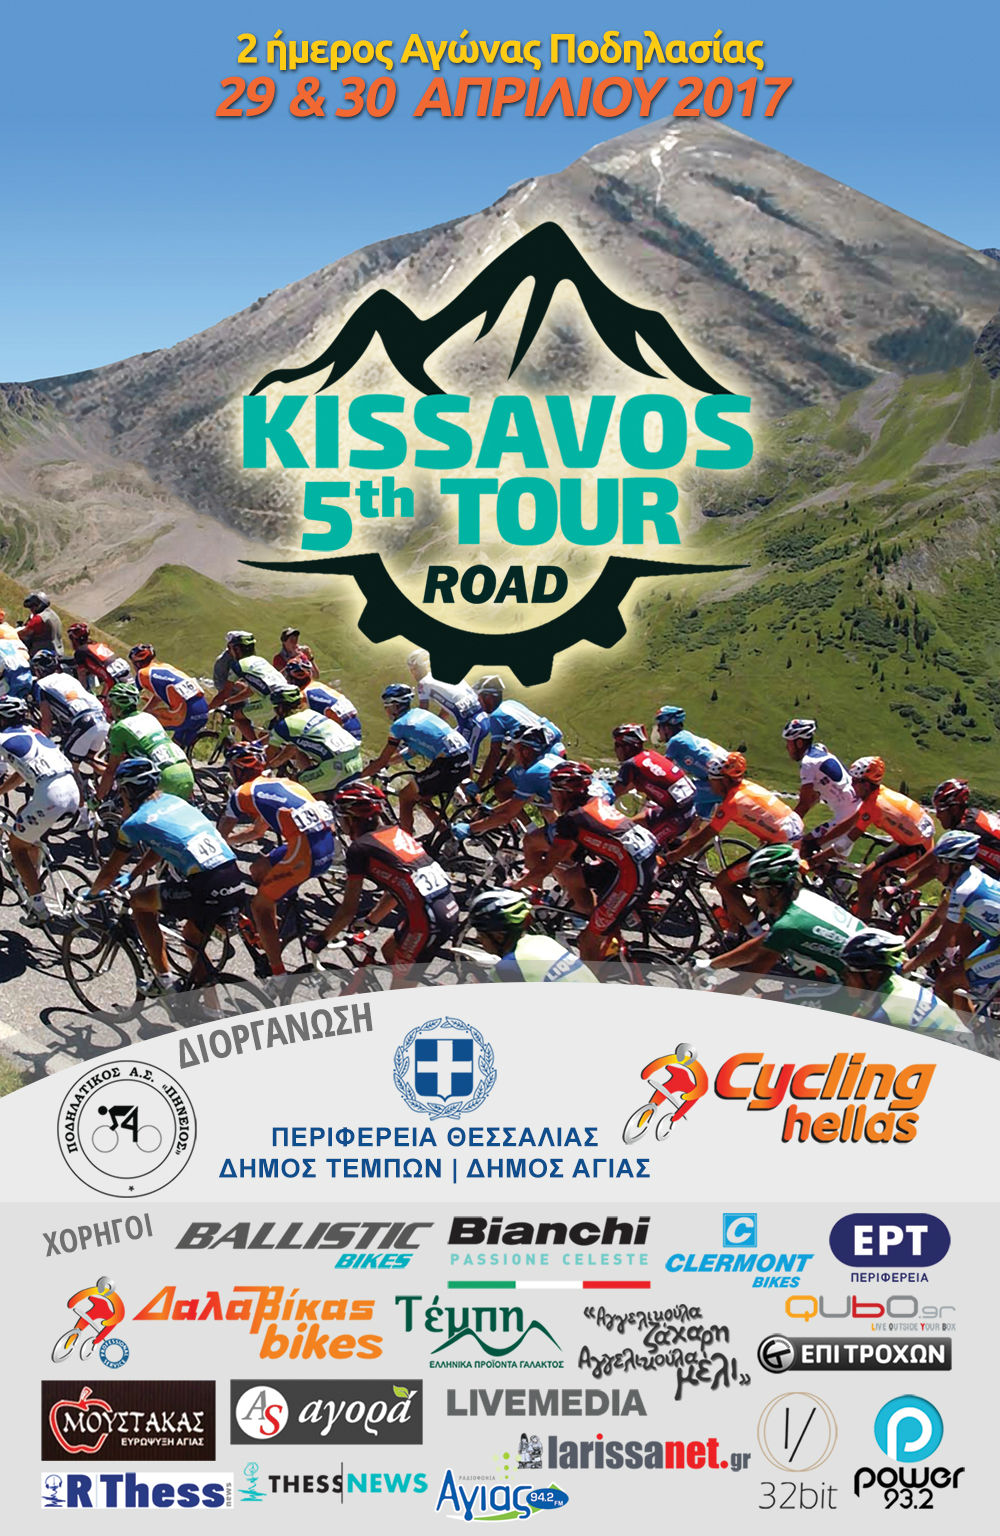 5th Kissavos Road Tour 2017